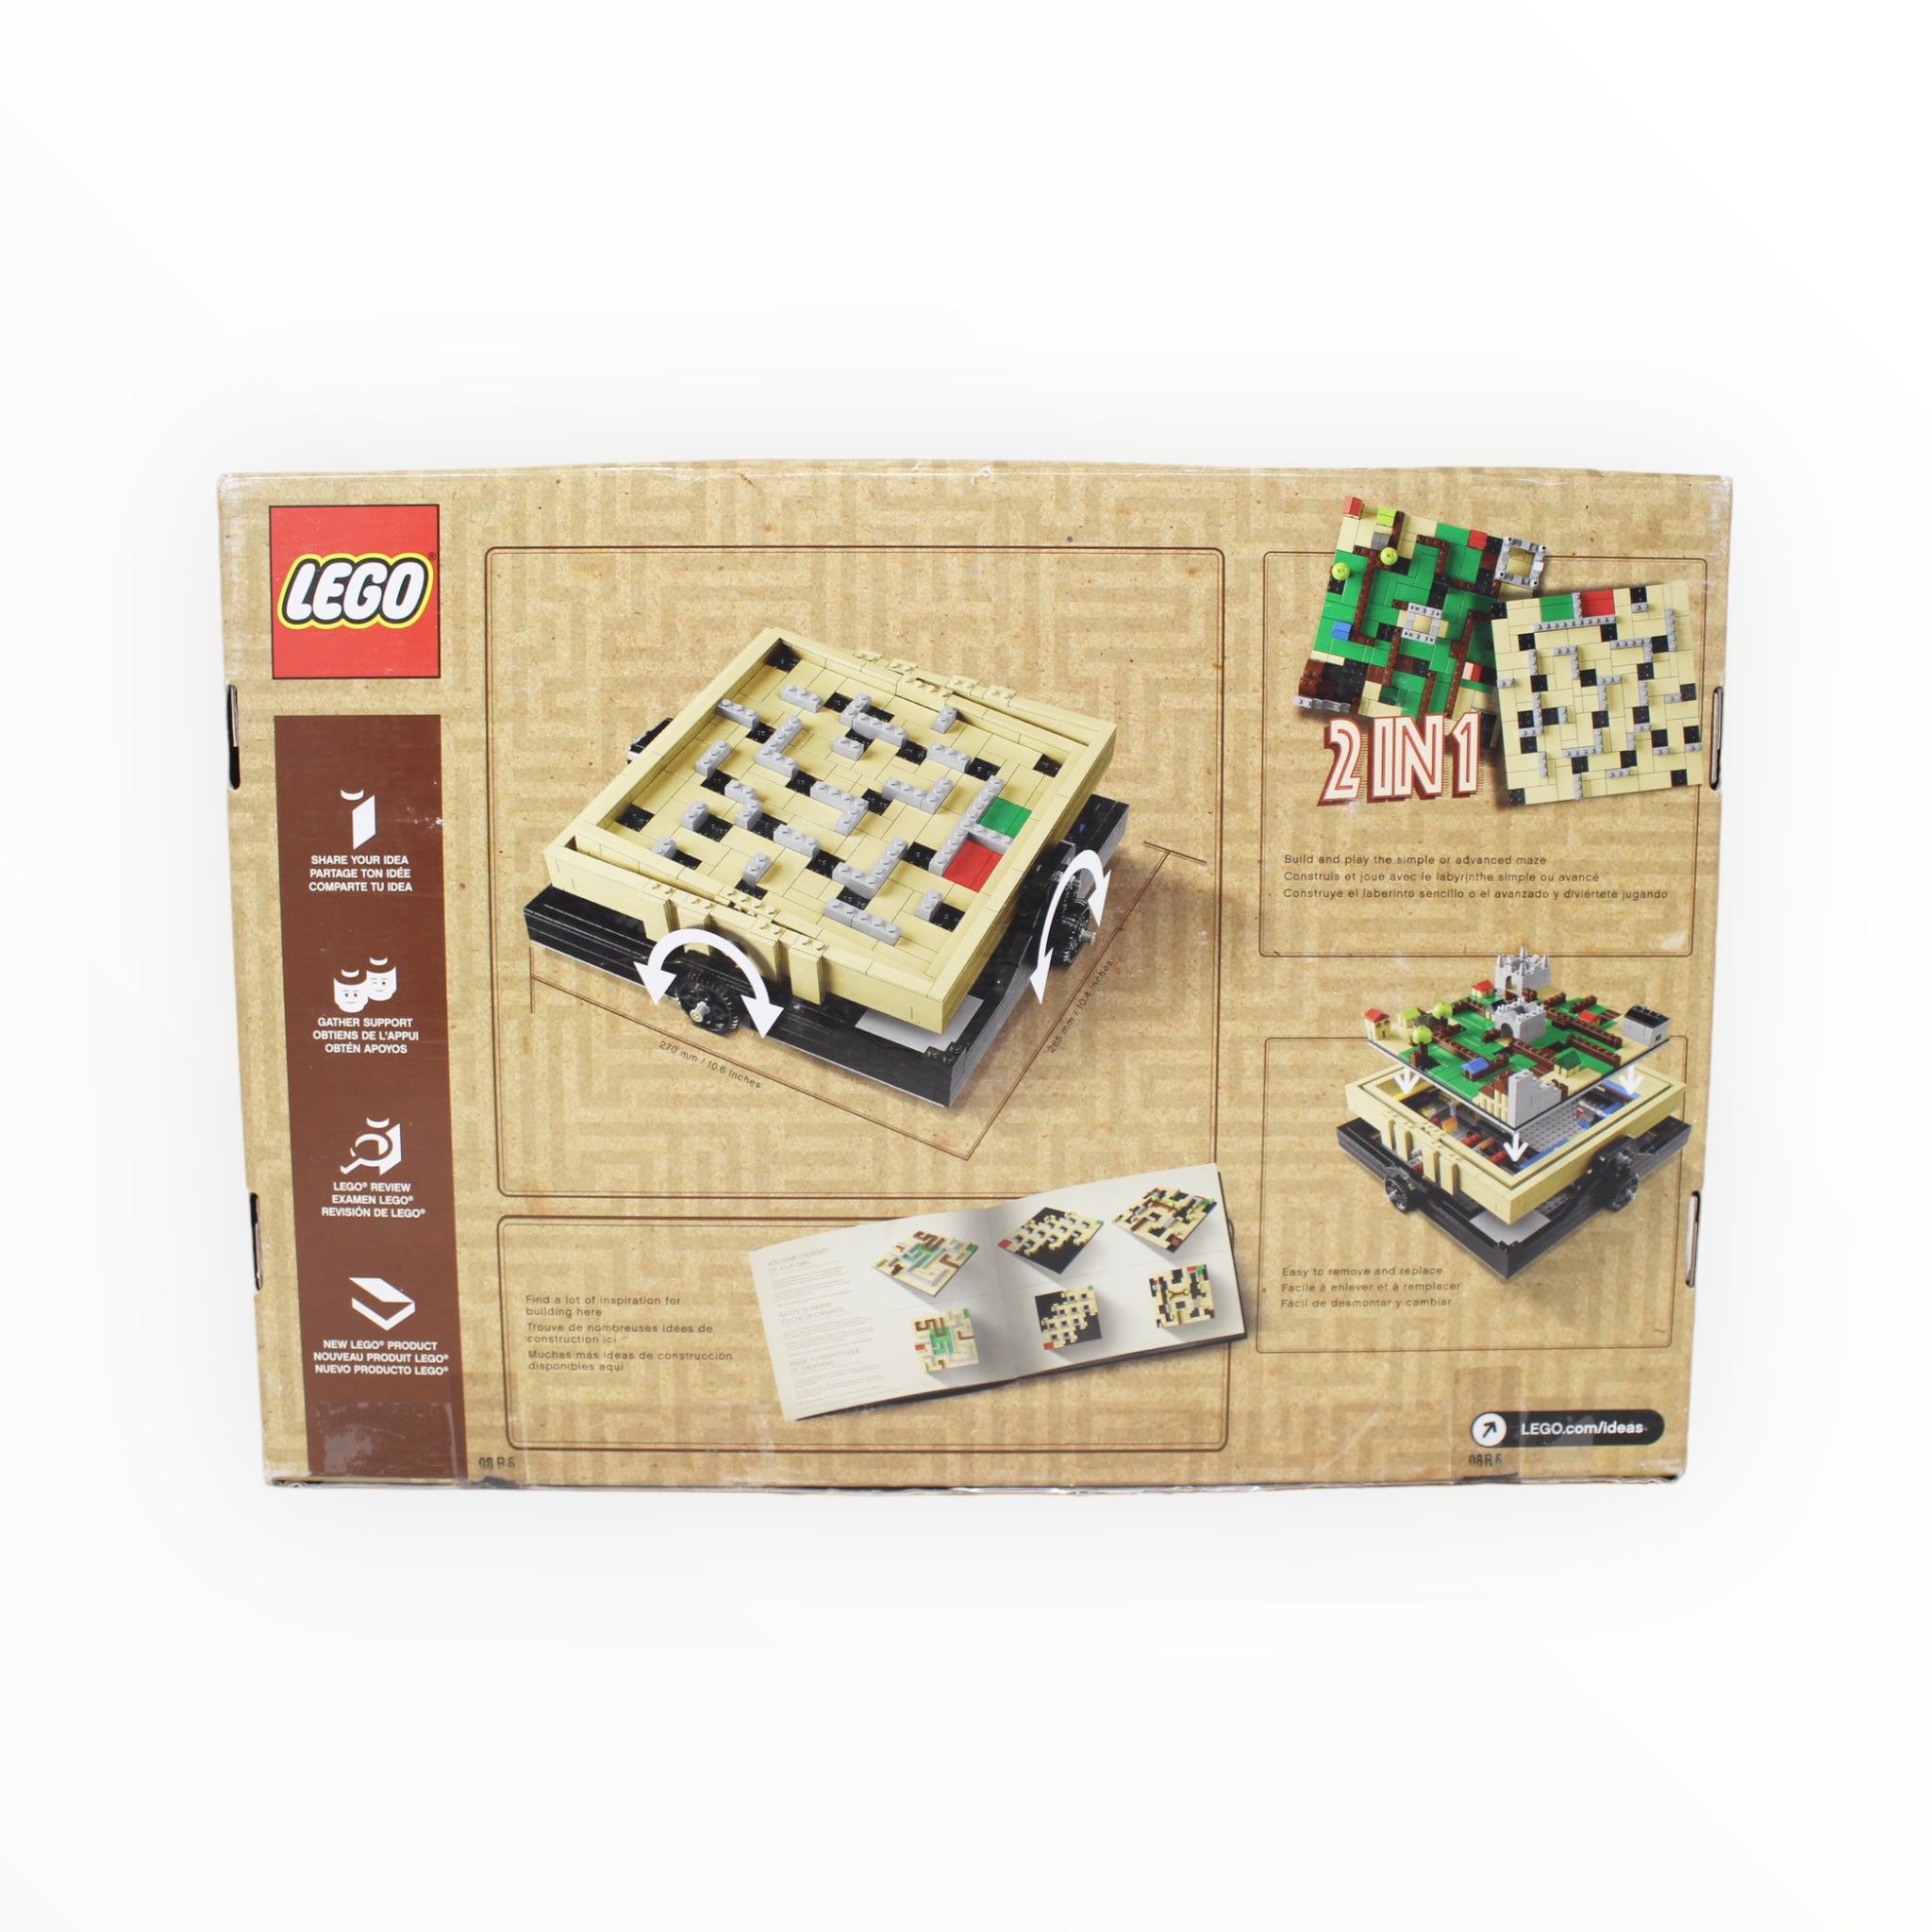 Certified Used Set 21305 LEGO Ideas Maze